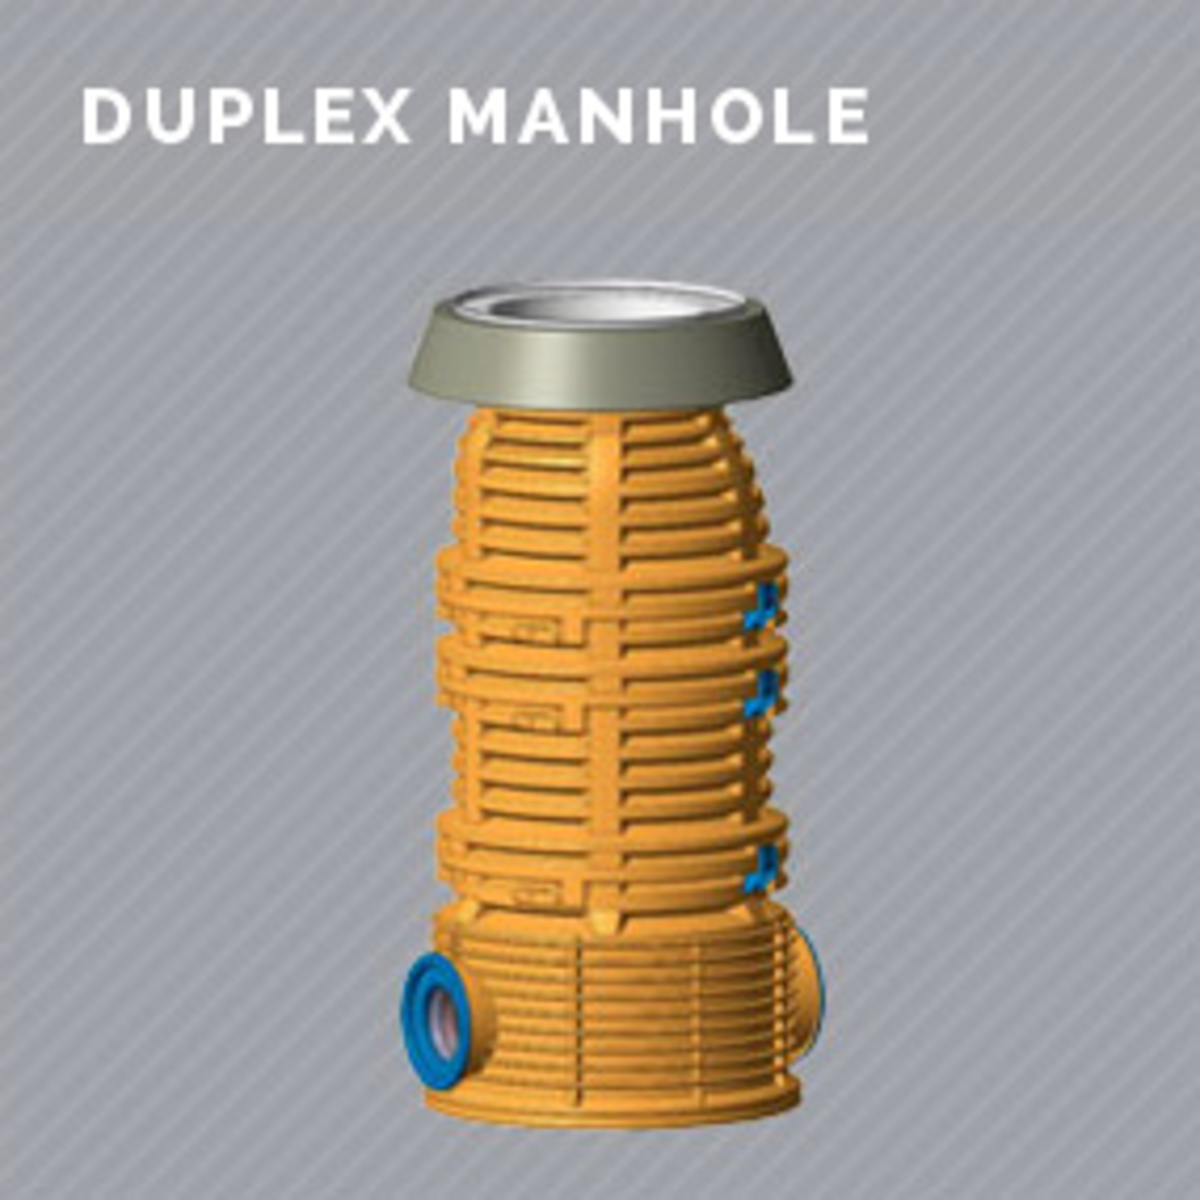 predl duplex manhole diagrammi